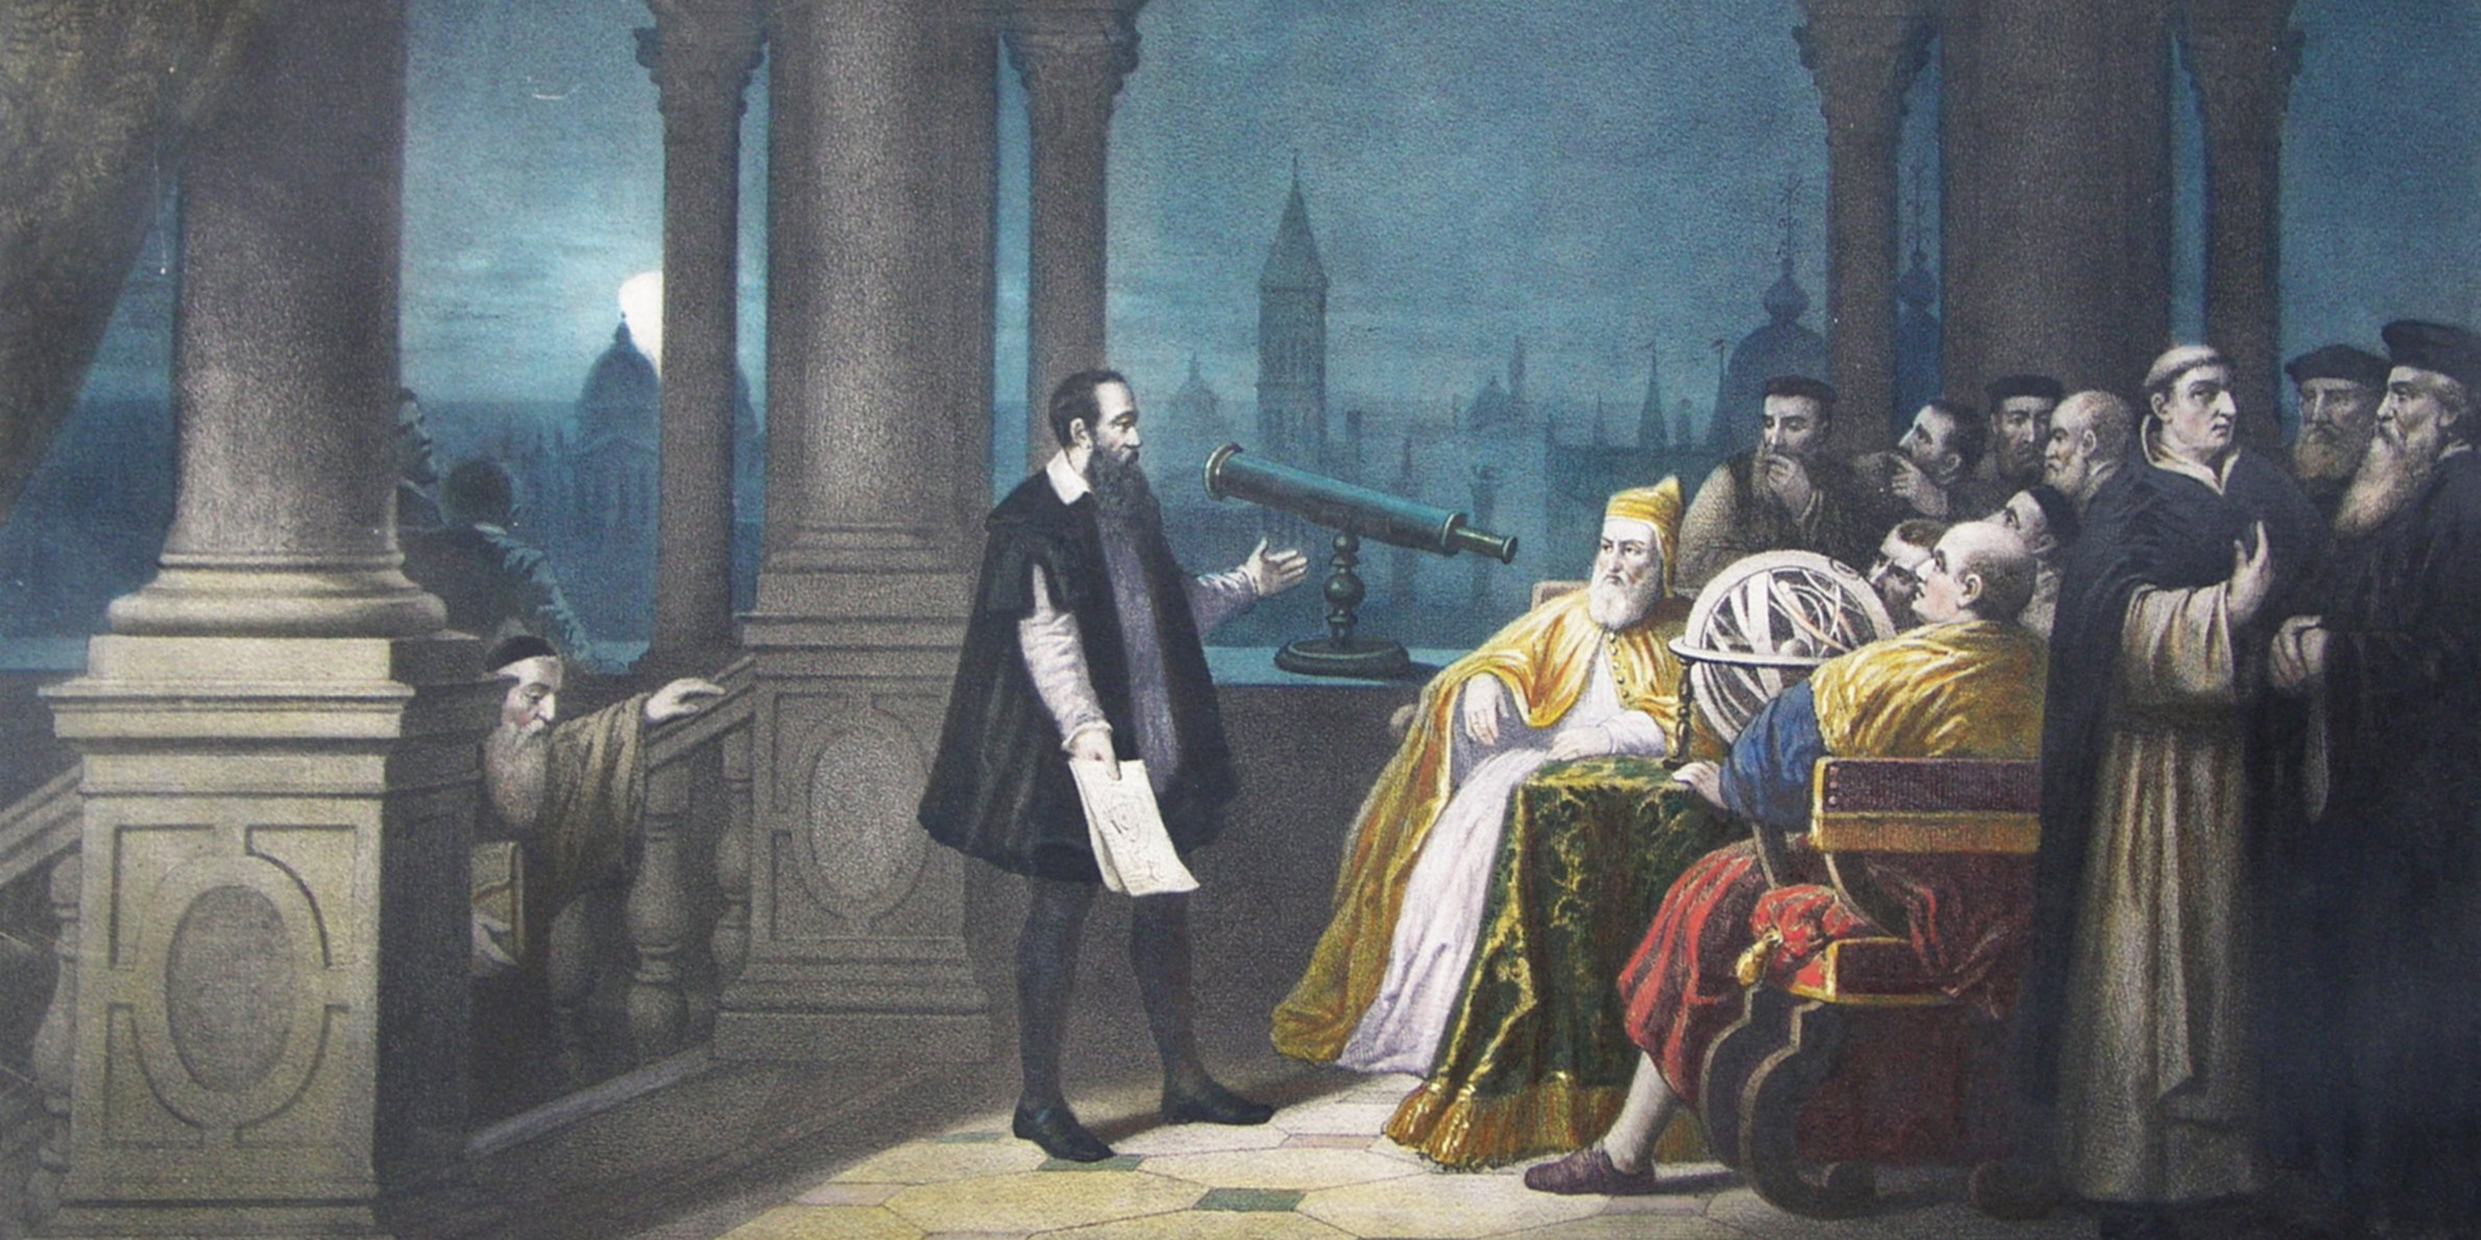 Painting of Galileo demonstrating his telescope